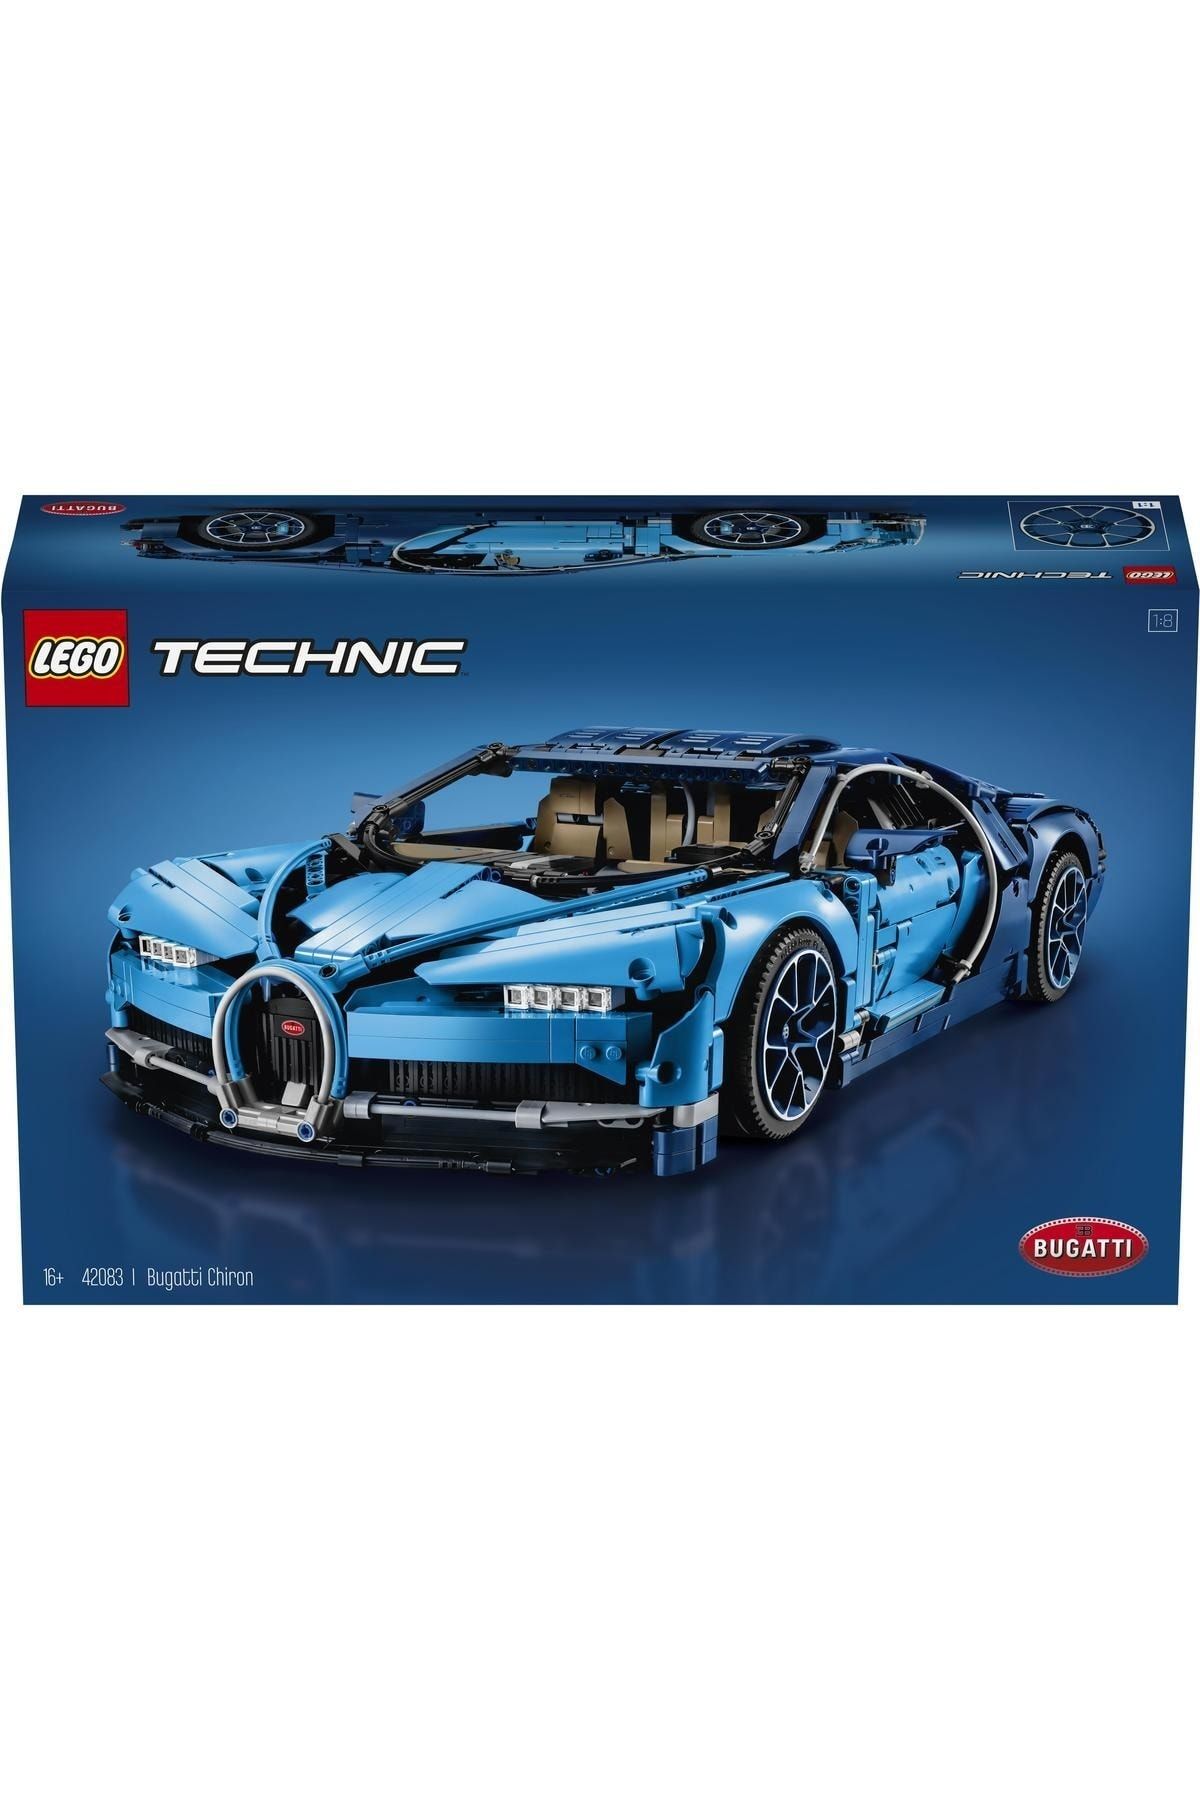 LEGO لگو ست ساختمان ماشین مسابقه ای بوگاتی چیرون Technic مدل ماشین اسپرت کلکسیونی 3599 عدد